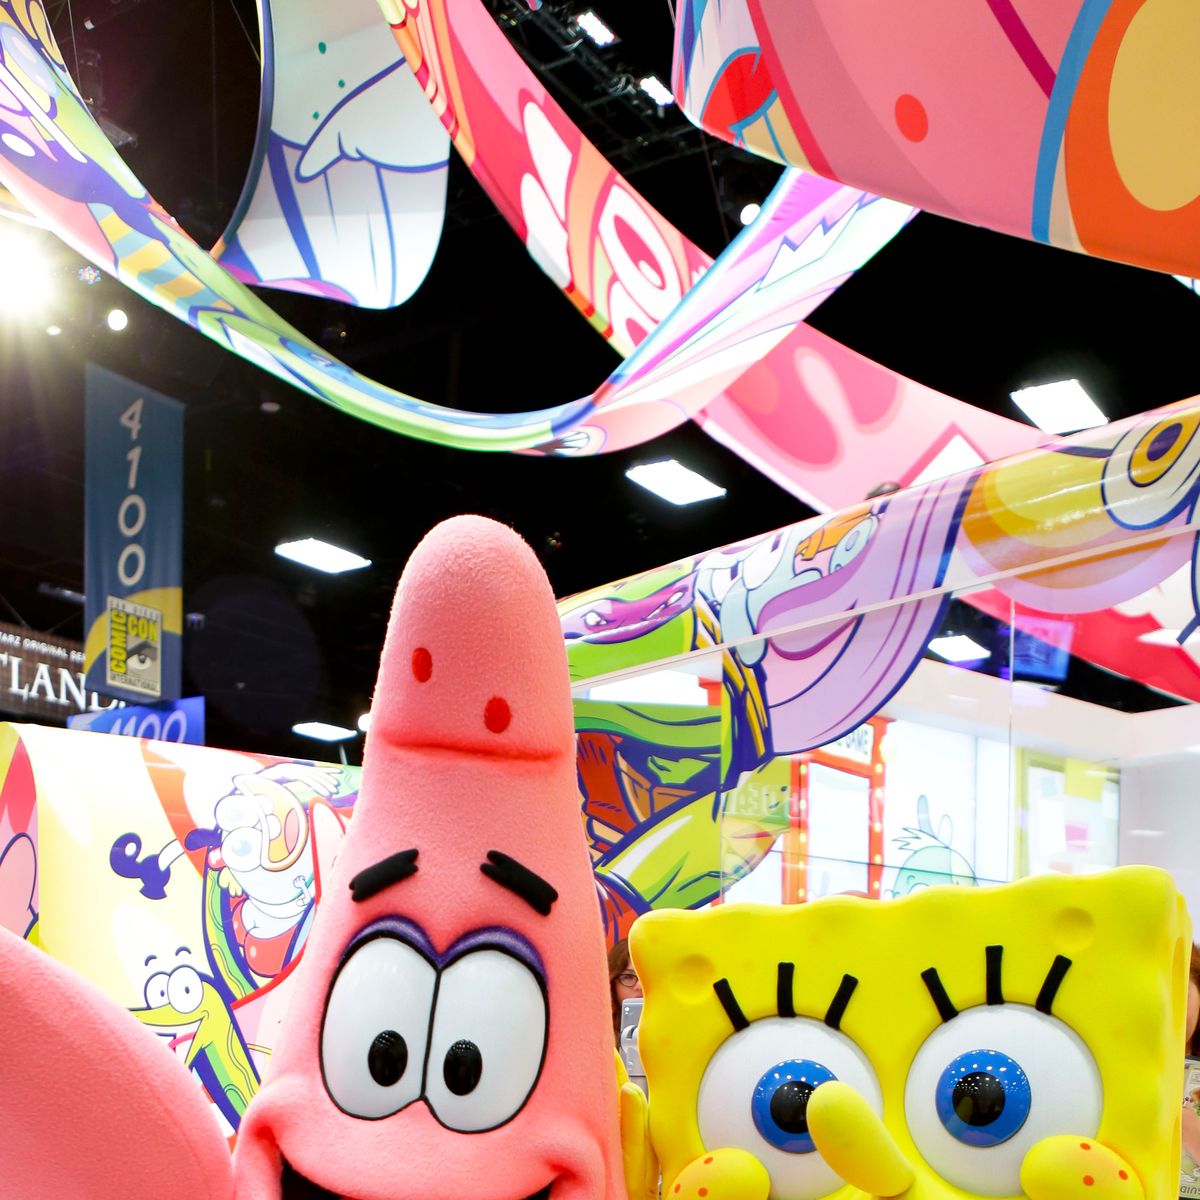 Nickelodeon Announced SpongeBob Is a Member of the LGBTQ+ Community